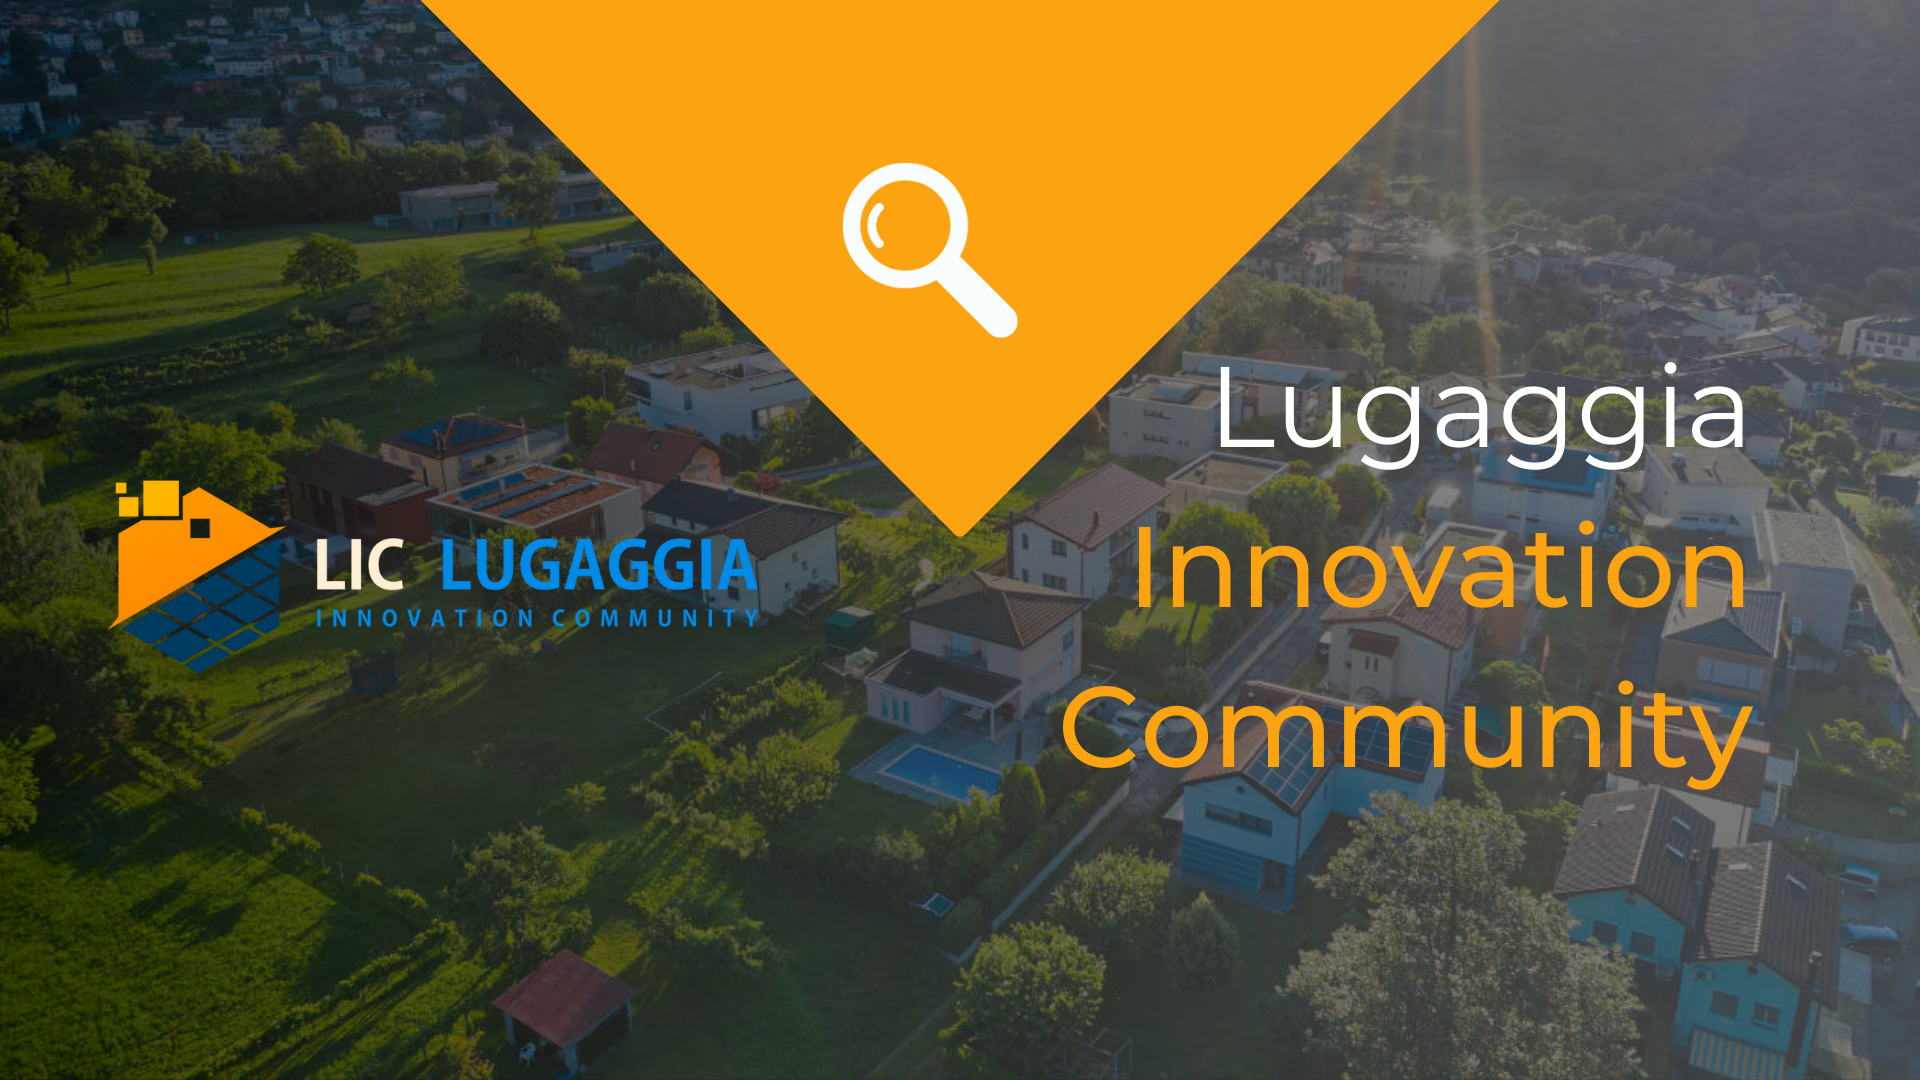 Lugaggia Innovation Community